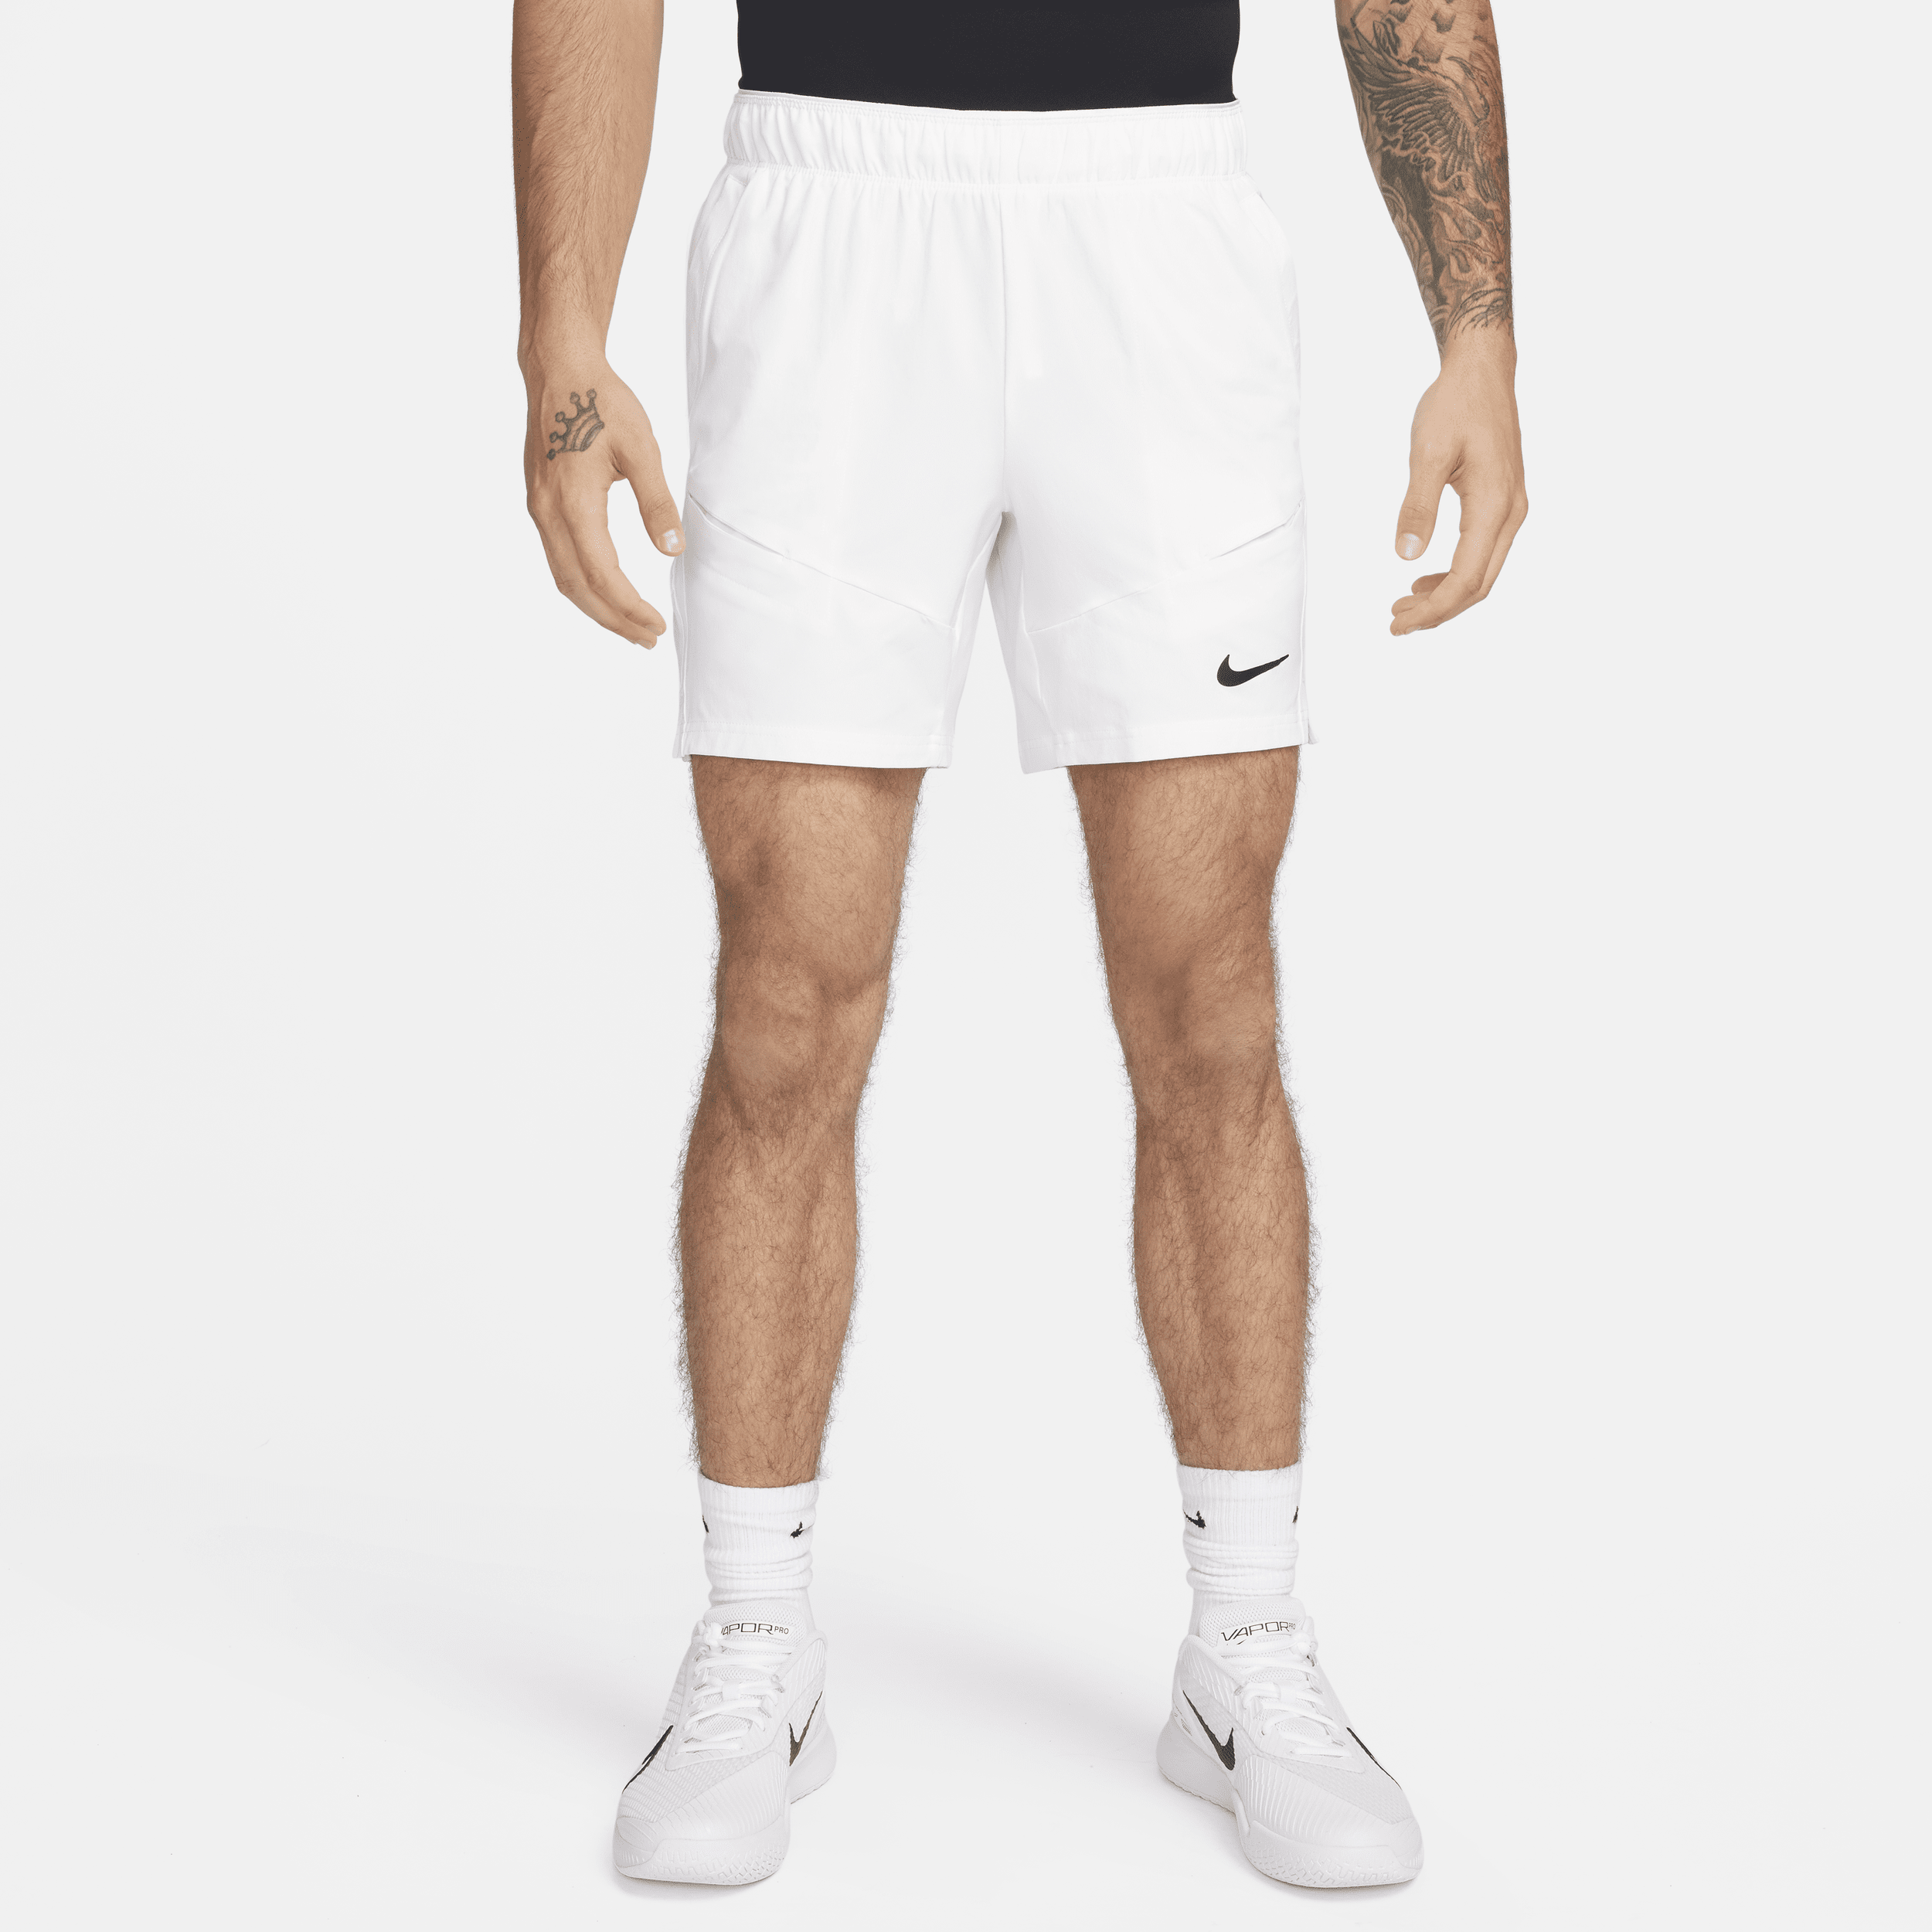 NikeCourt Advantage Dri-FIT-tennisshorts (18 cm) til mænd - hvid